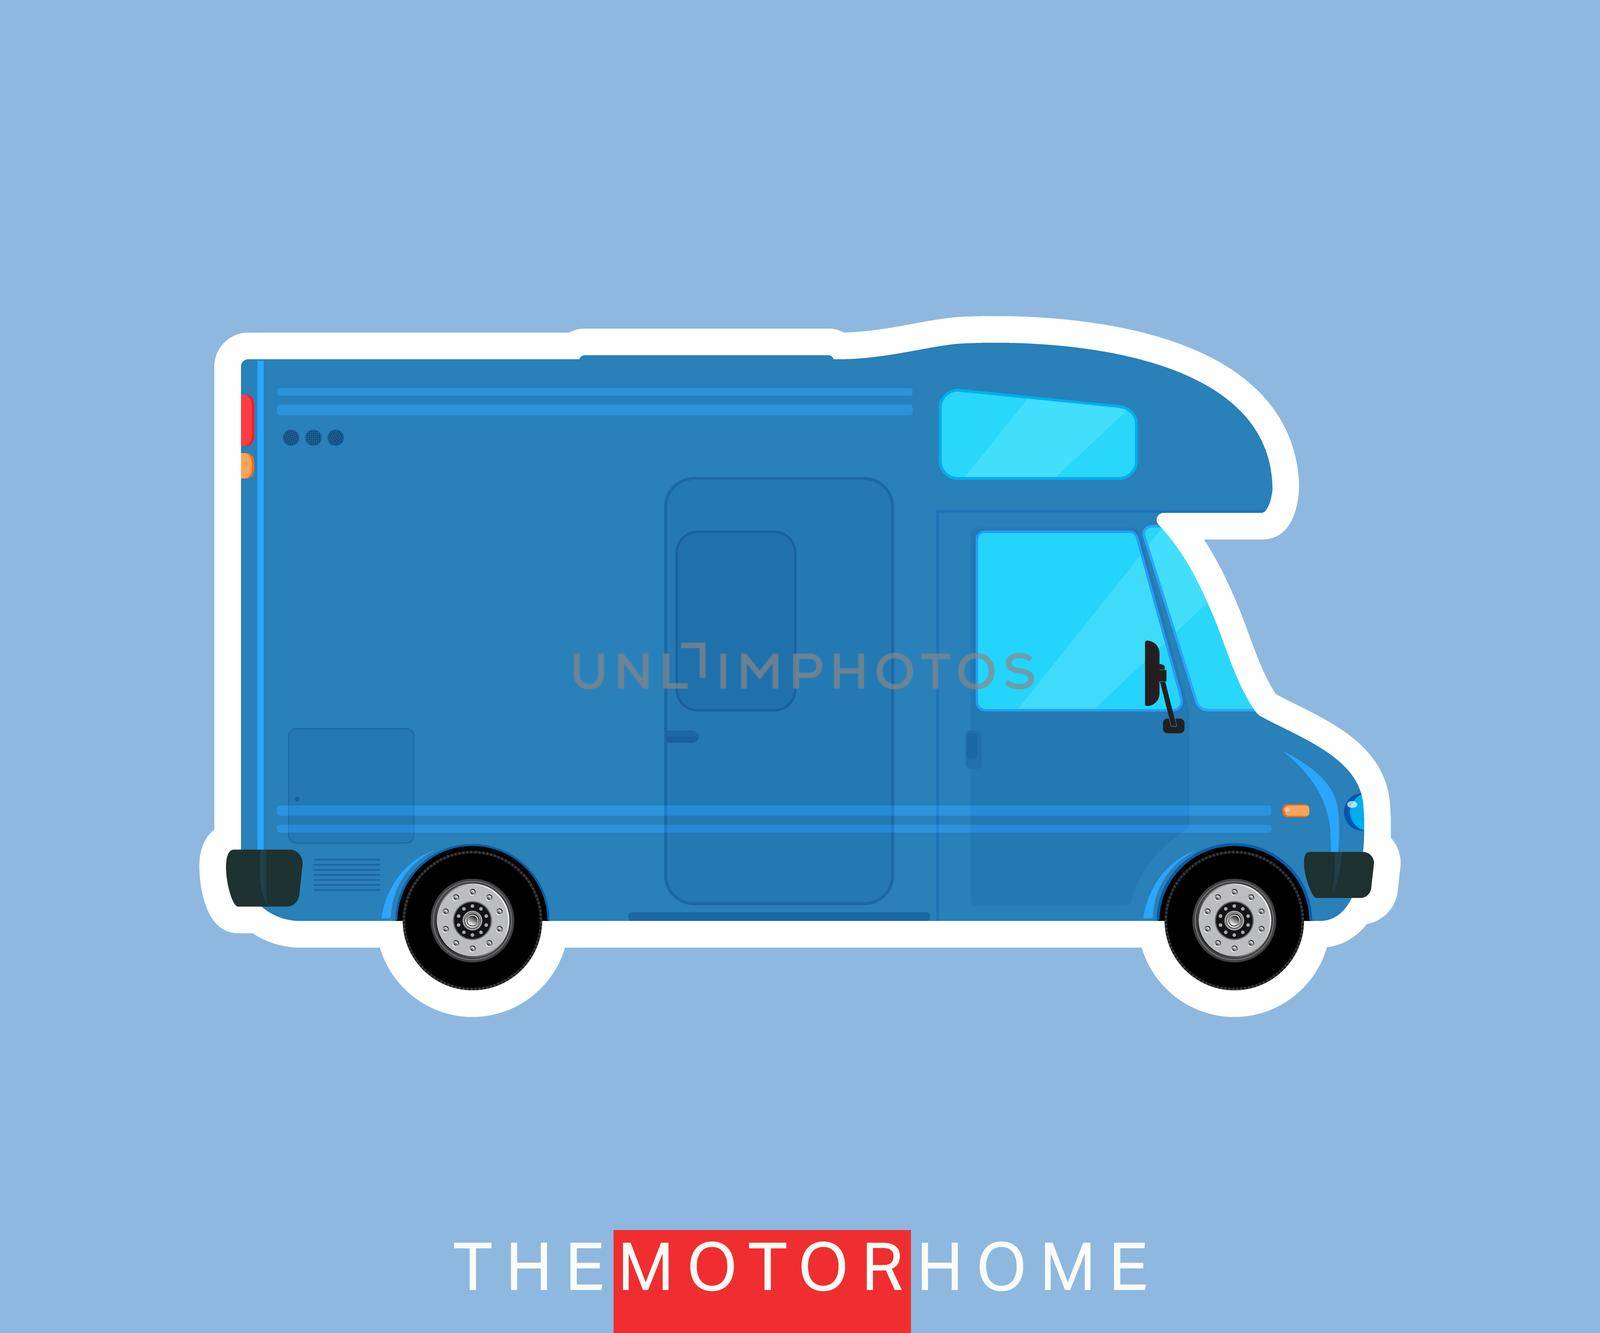 Recreational motorhome vehicle, camper van, caravan bus. Vector illustration.